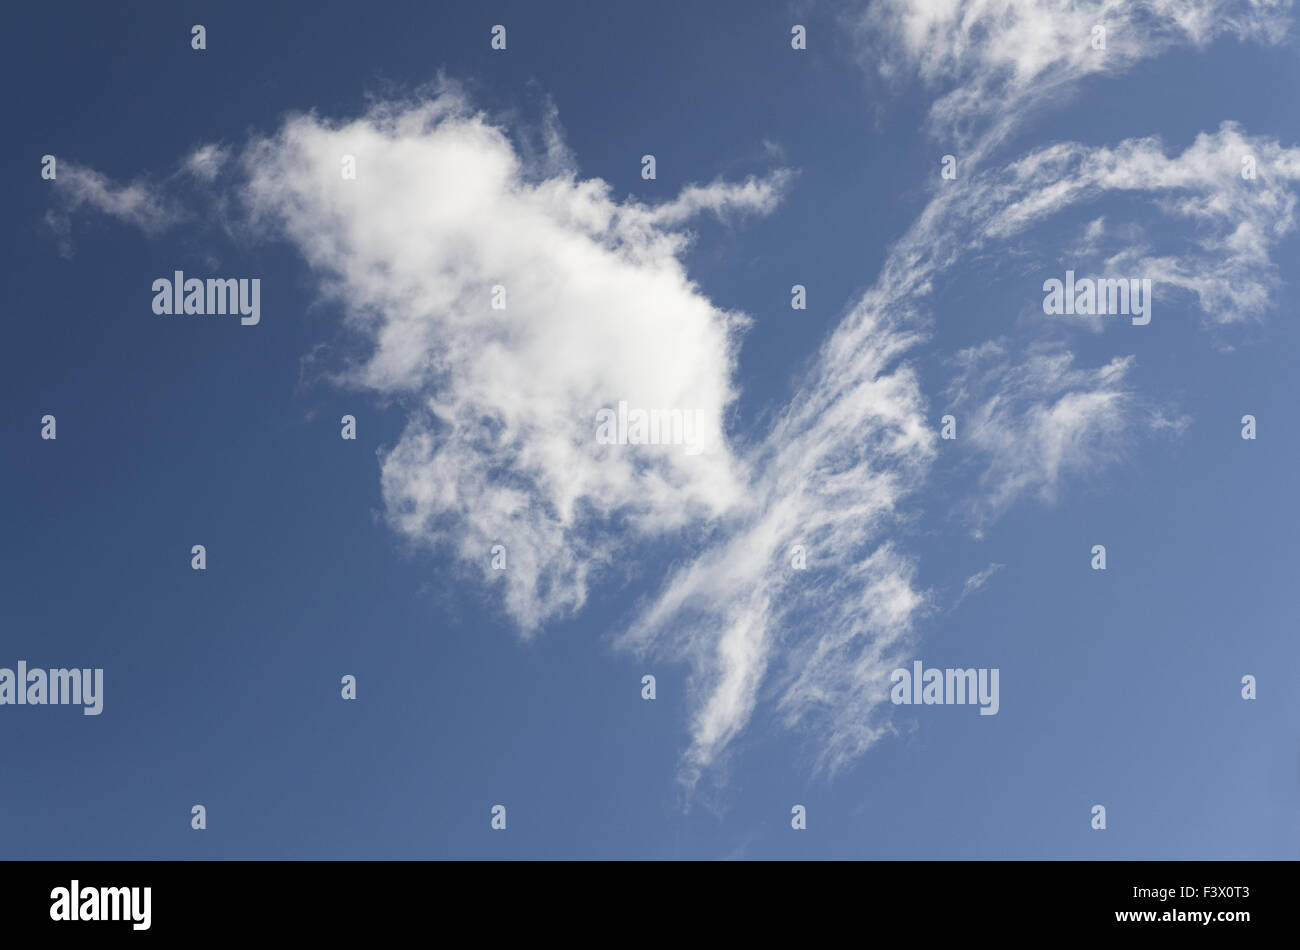 Cloud image Stock Photo